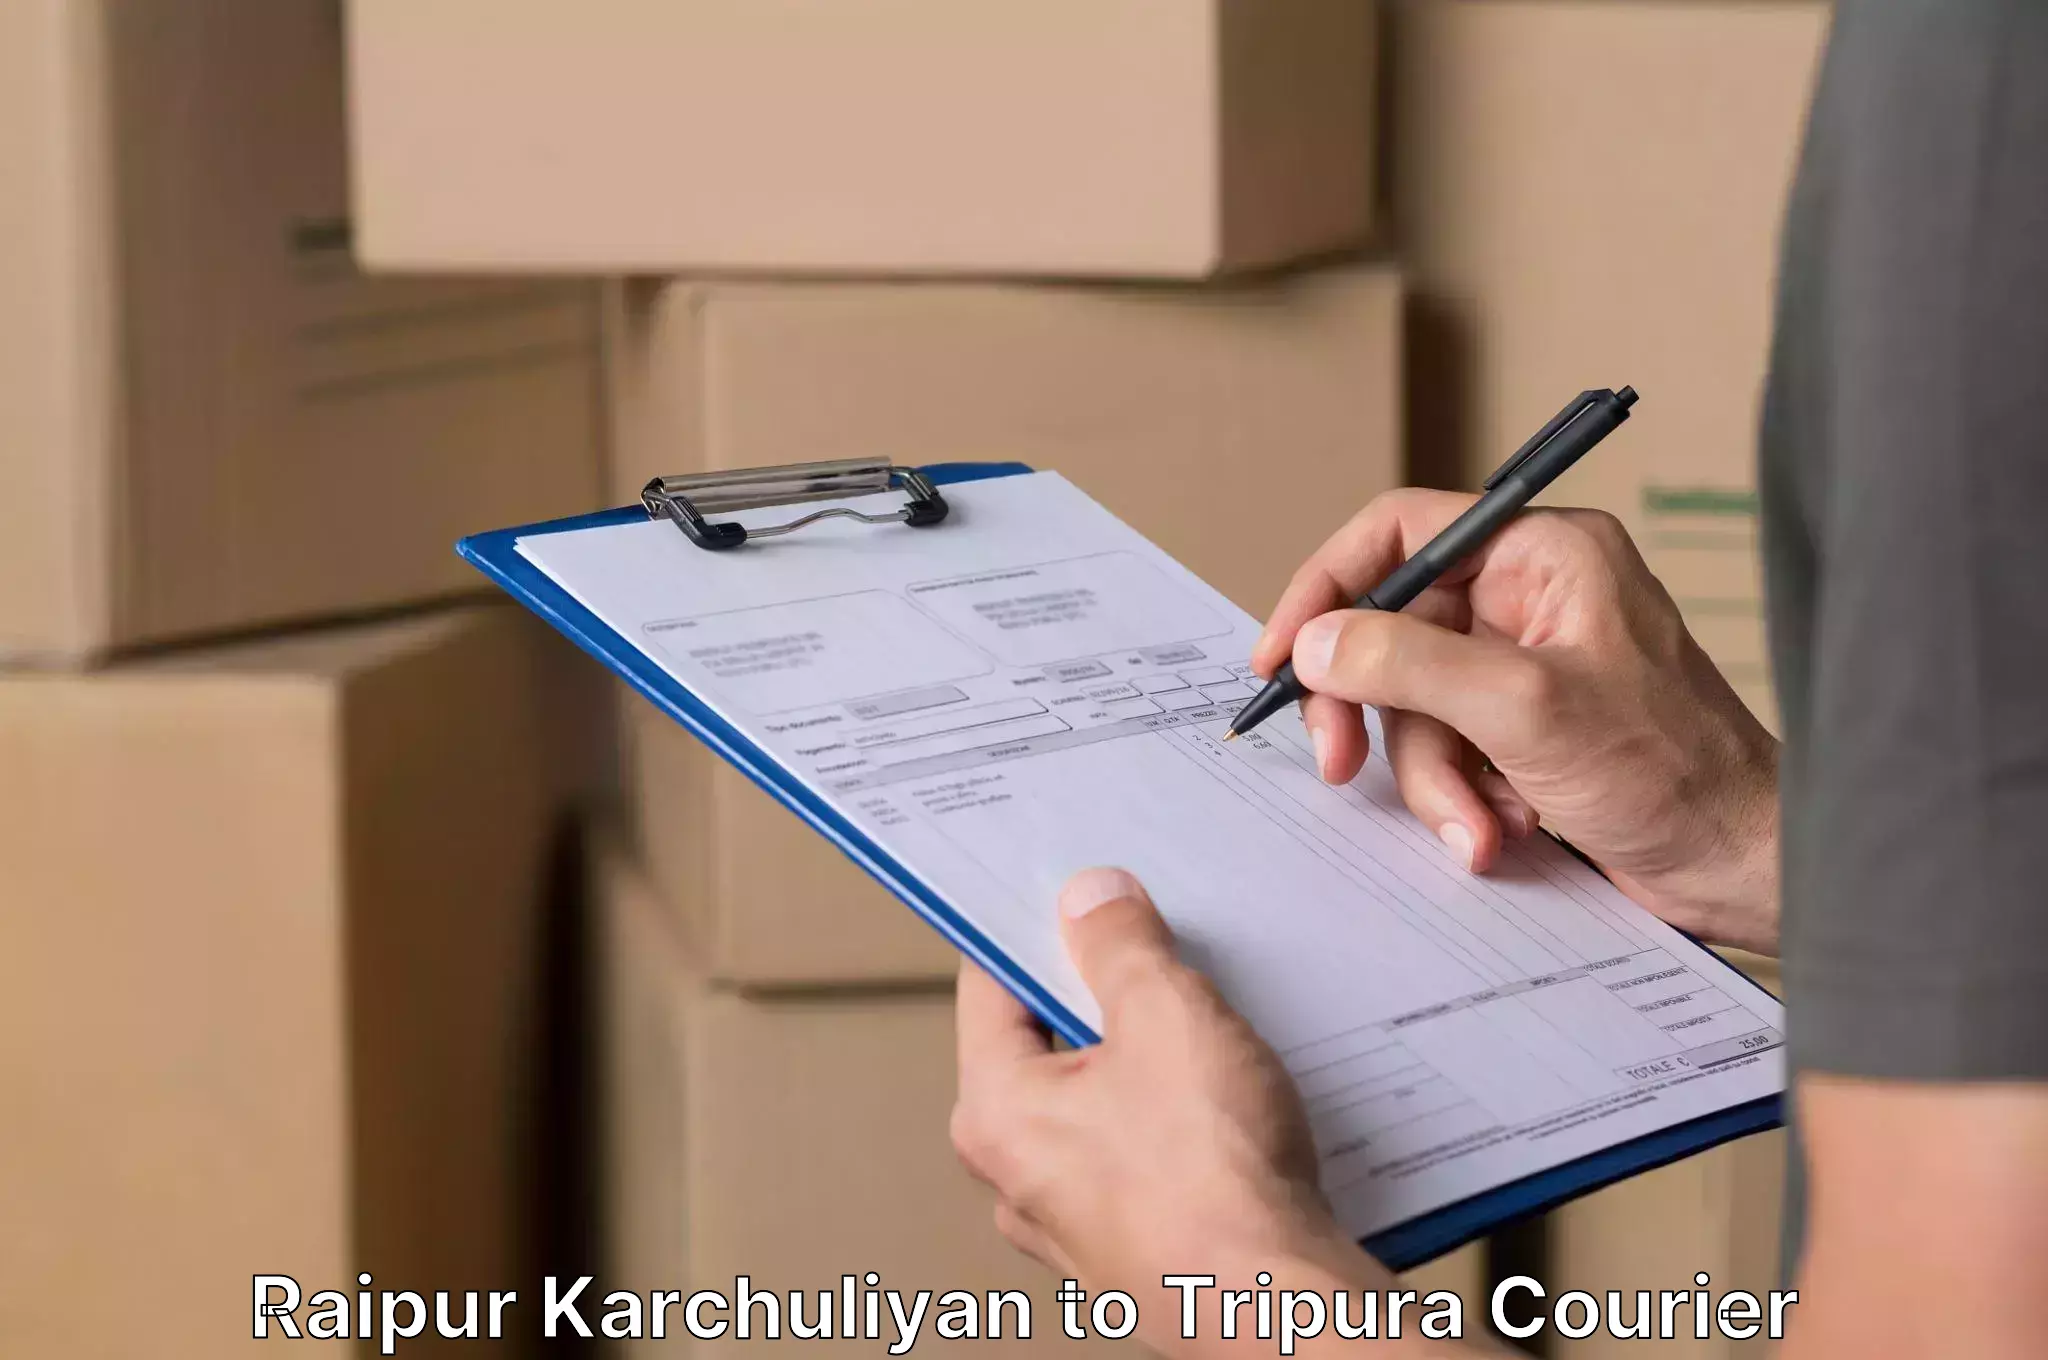 Household goods delivery Raipur Karchuliyan to Udaipur Tripura